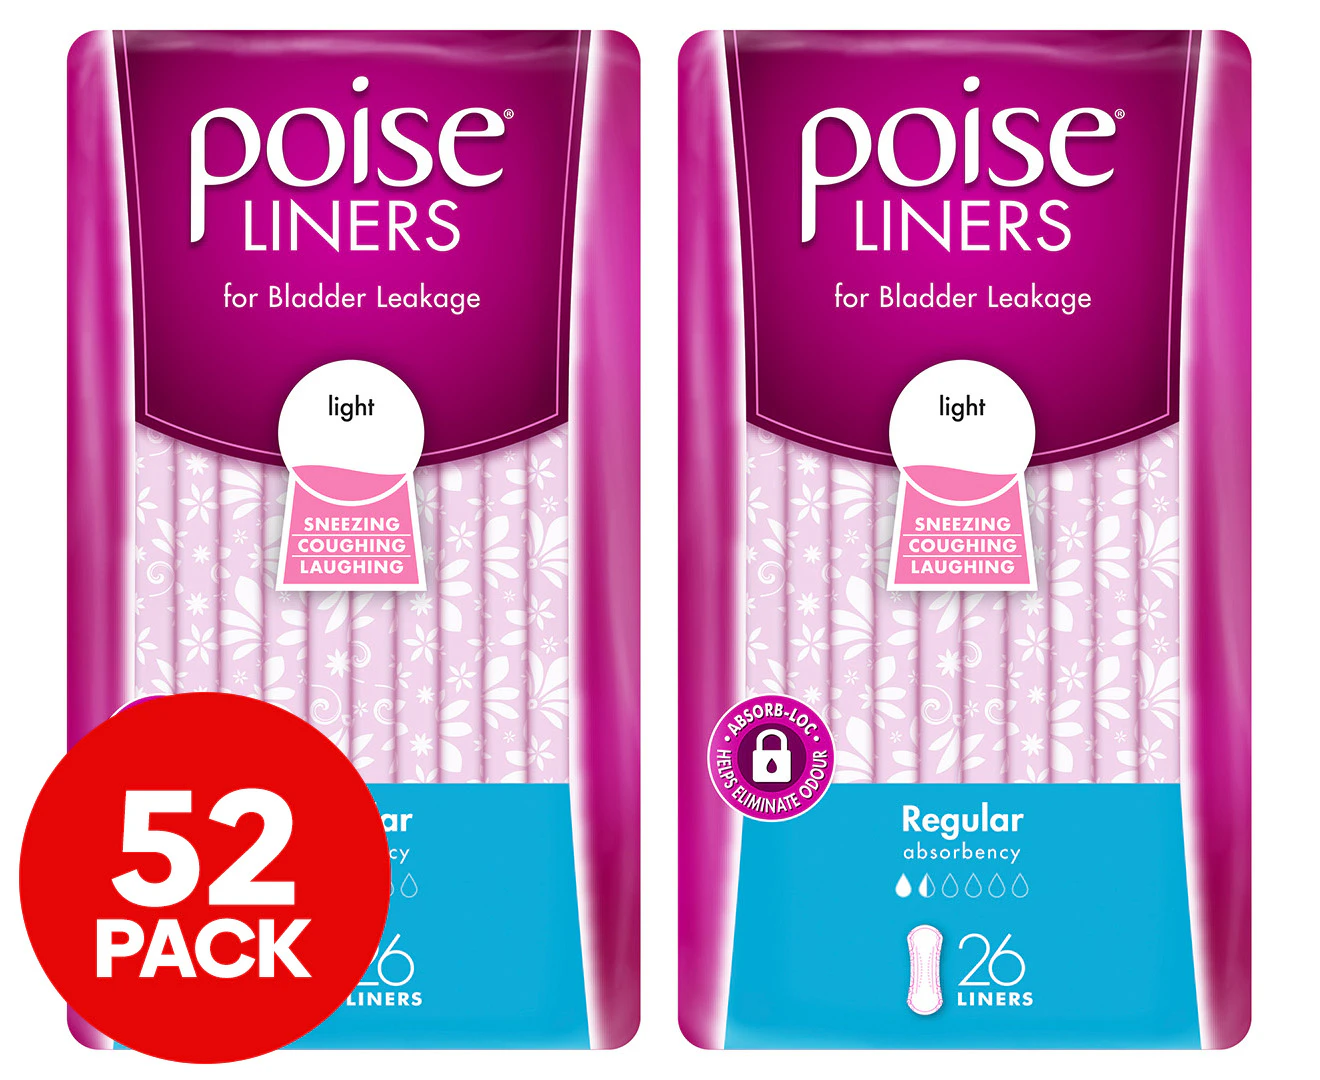 Buy Poise Liners For Bladder Leaks Extra Long 22 pack